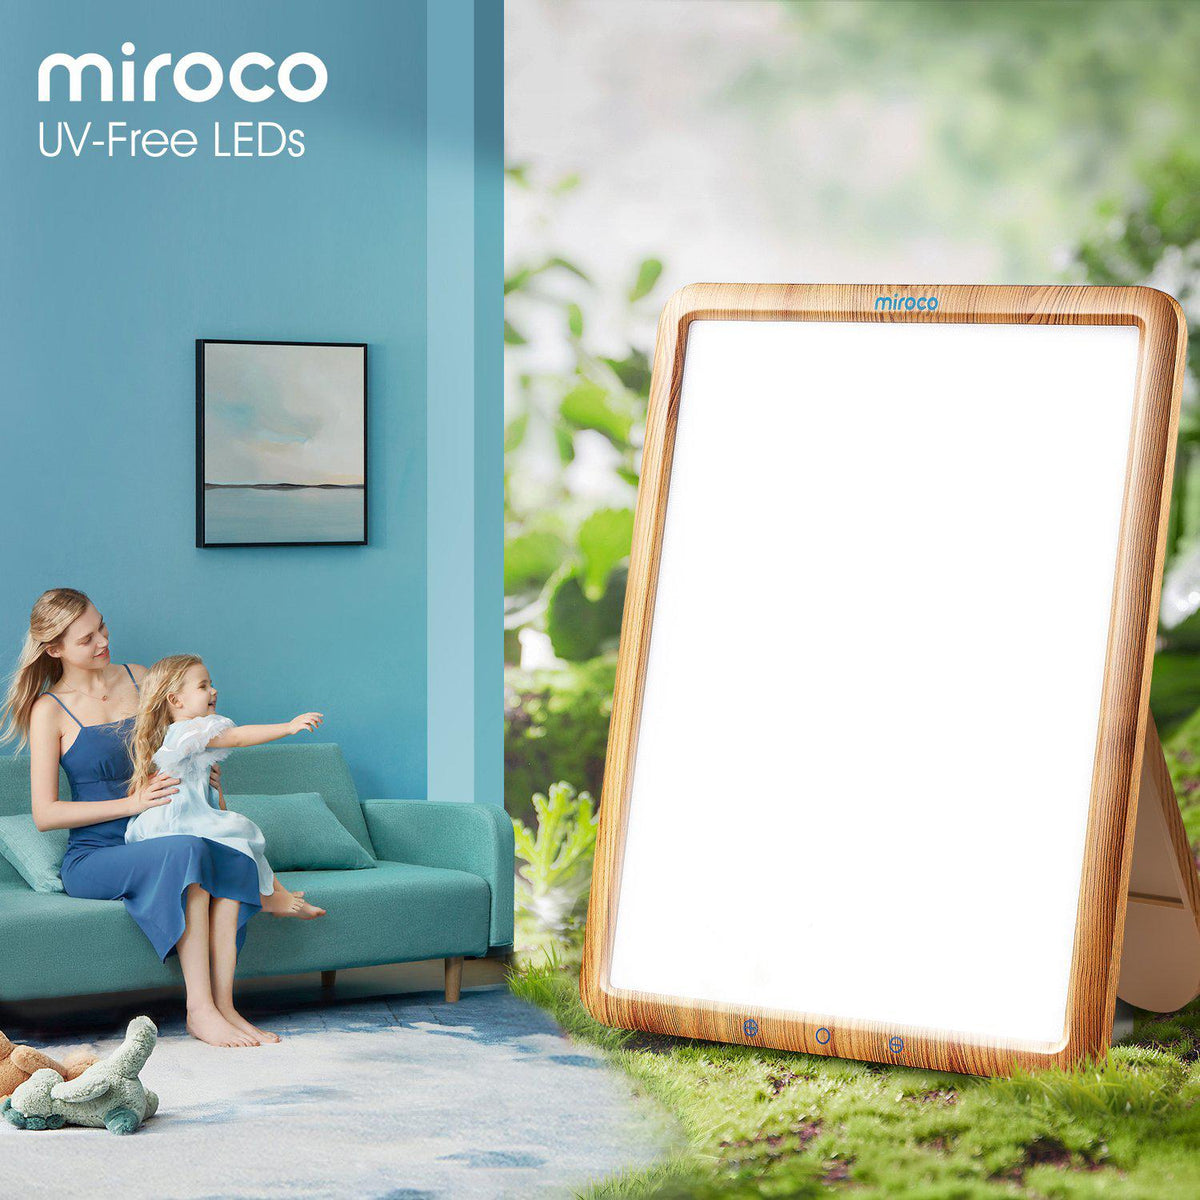 Miroco Light Therapy Lamp, UV-Free 10000 Lux LED Light-TaoTronics